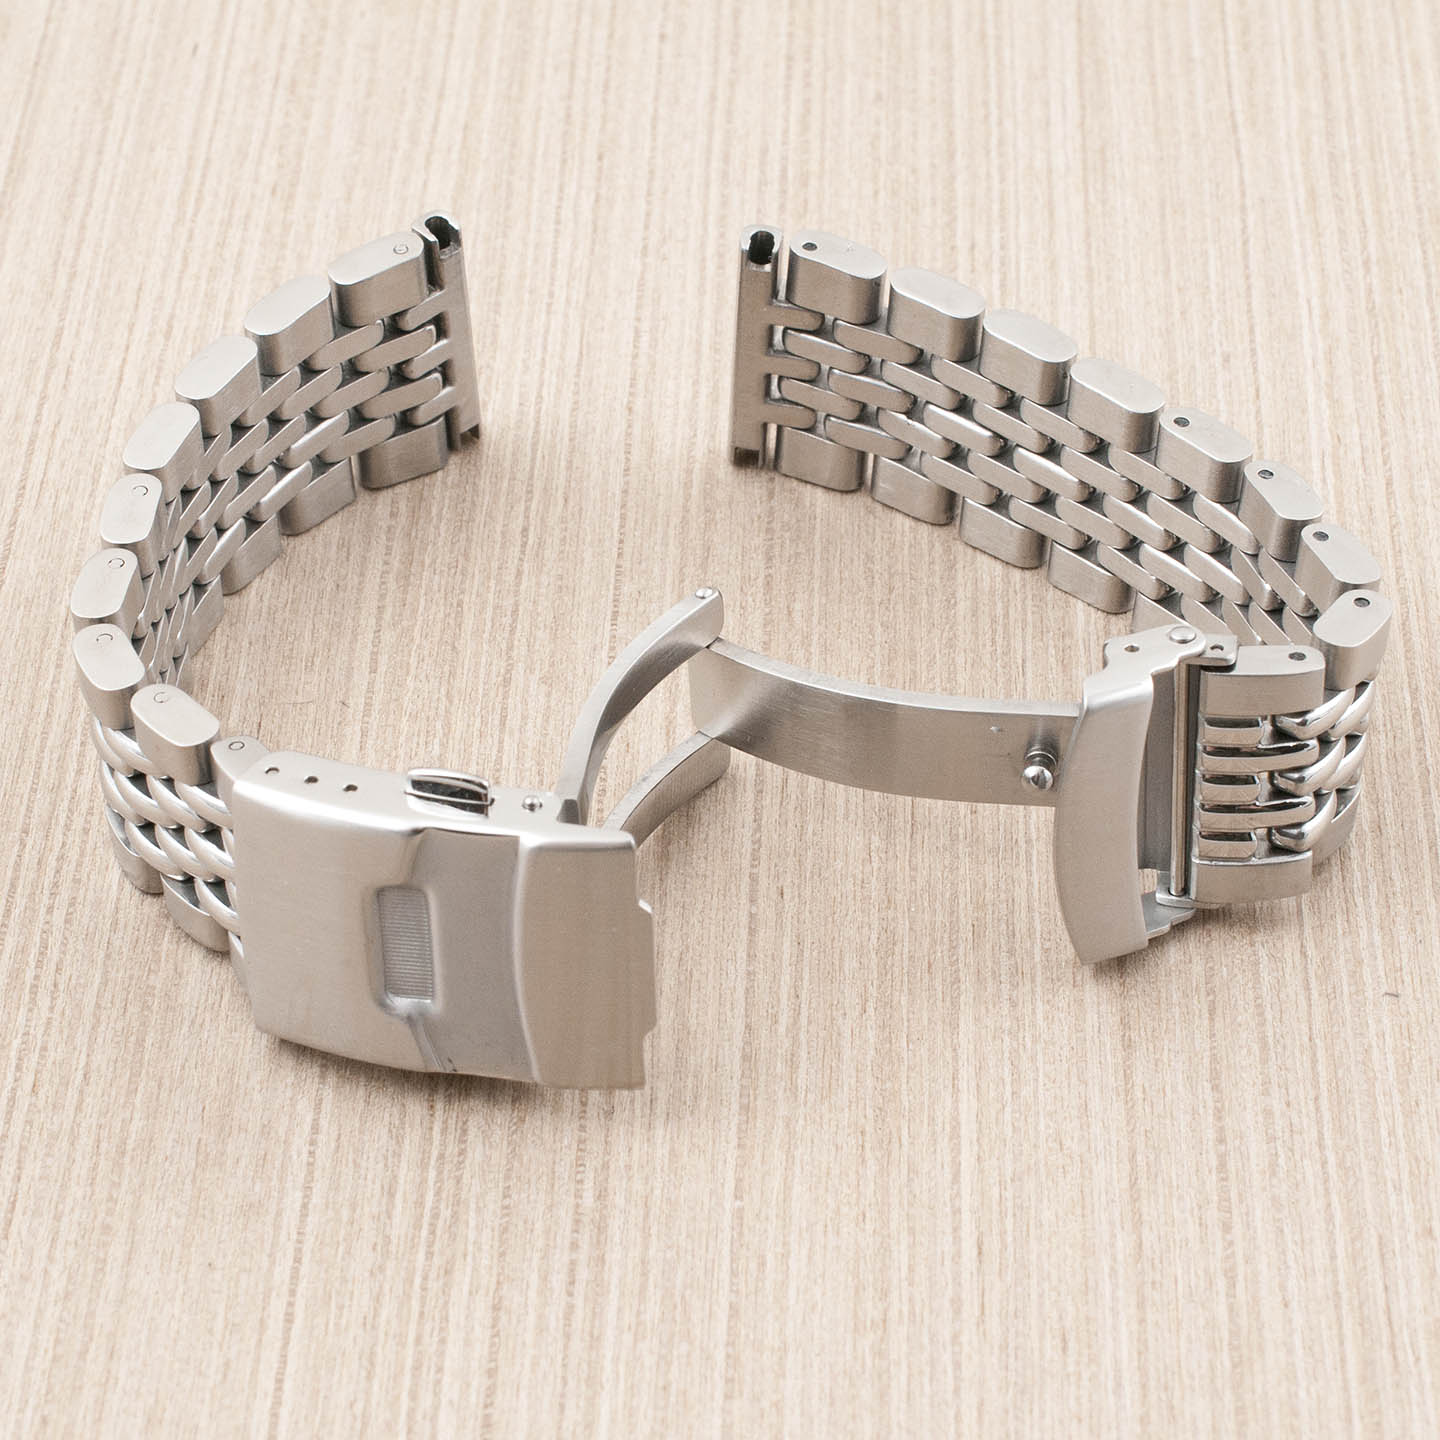 Stainless Steel Beads of Rice Bracelet | StrapHabit